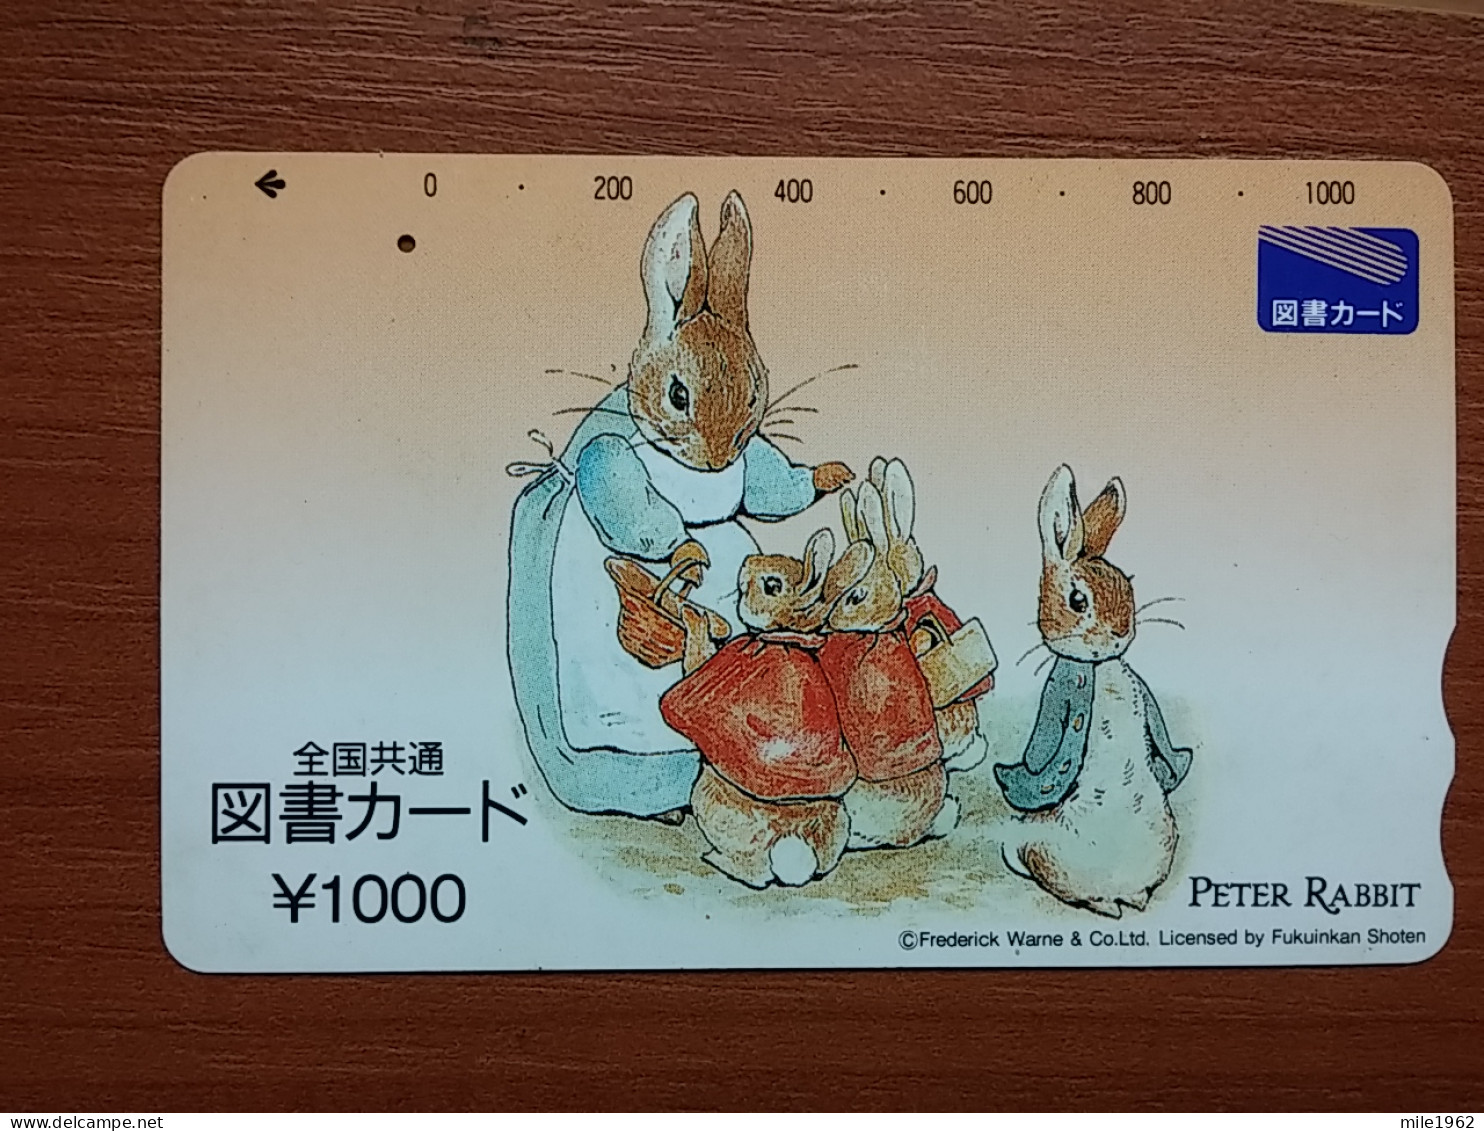 T-429 - JAPAN, Japon, Nipon, Carte Prepayee, Prepaid, Animal, Rabbit, Lapin - Conigli